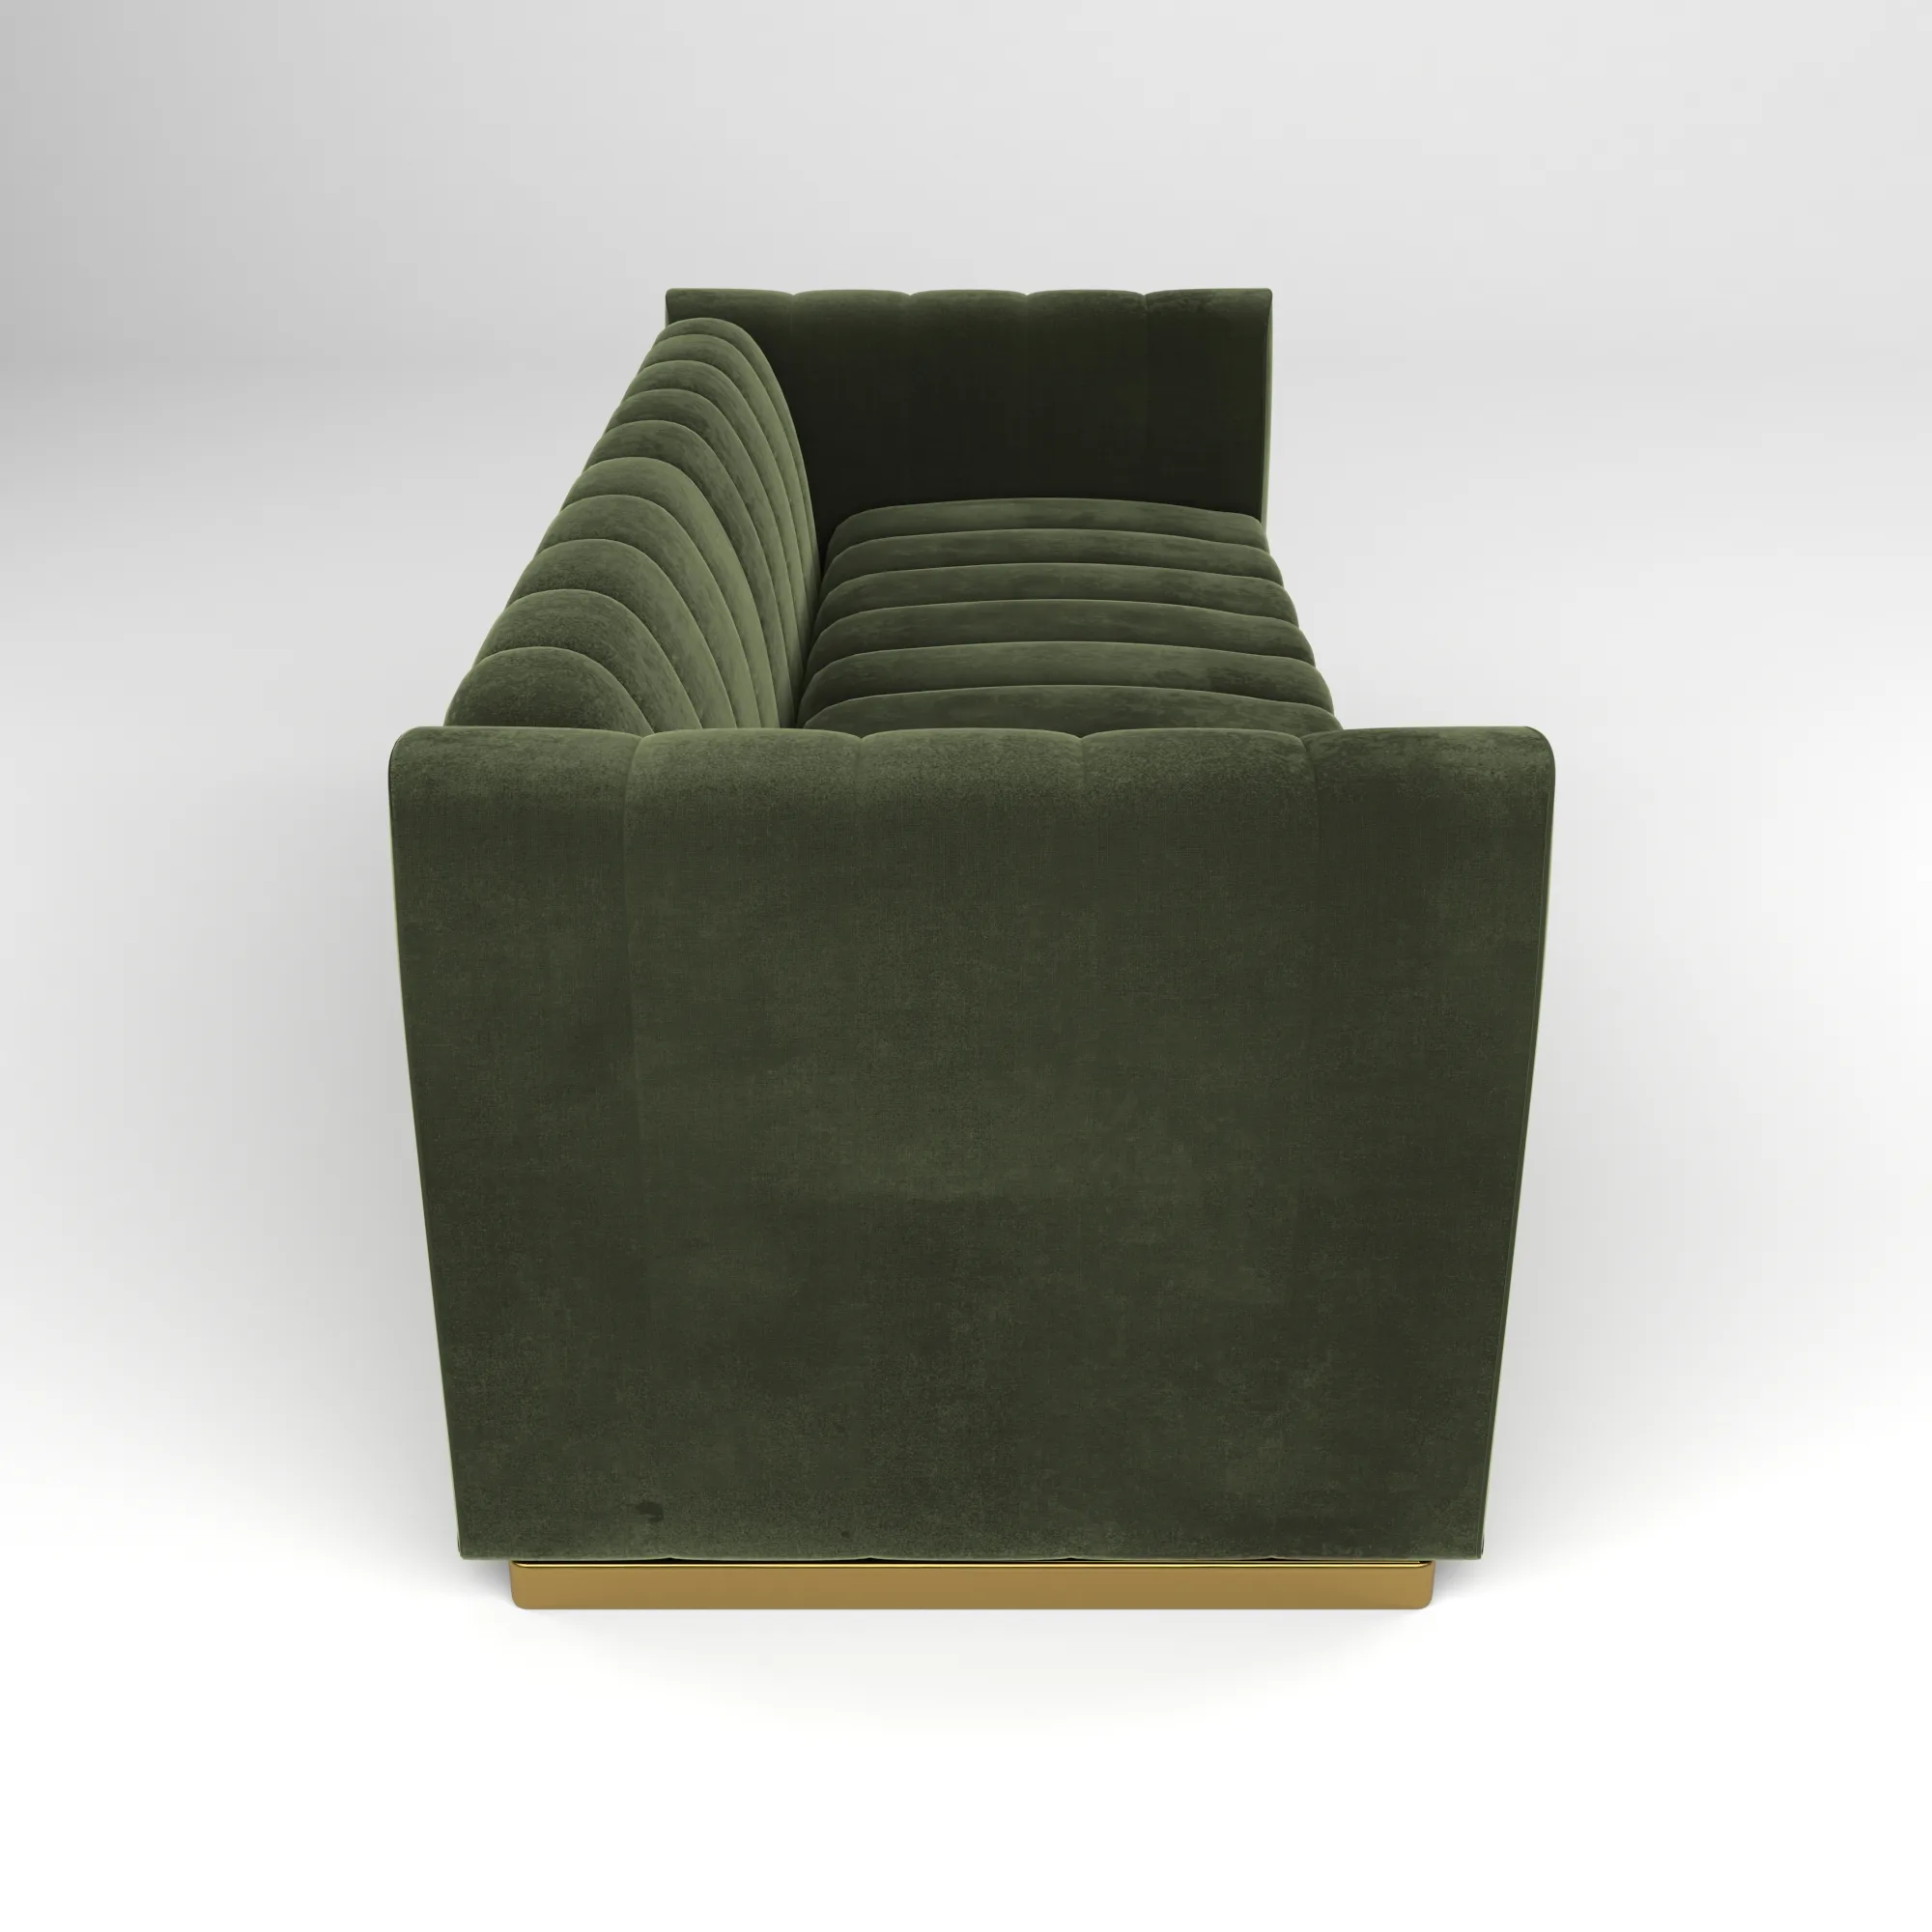 Green Sofa